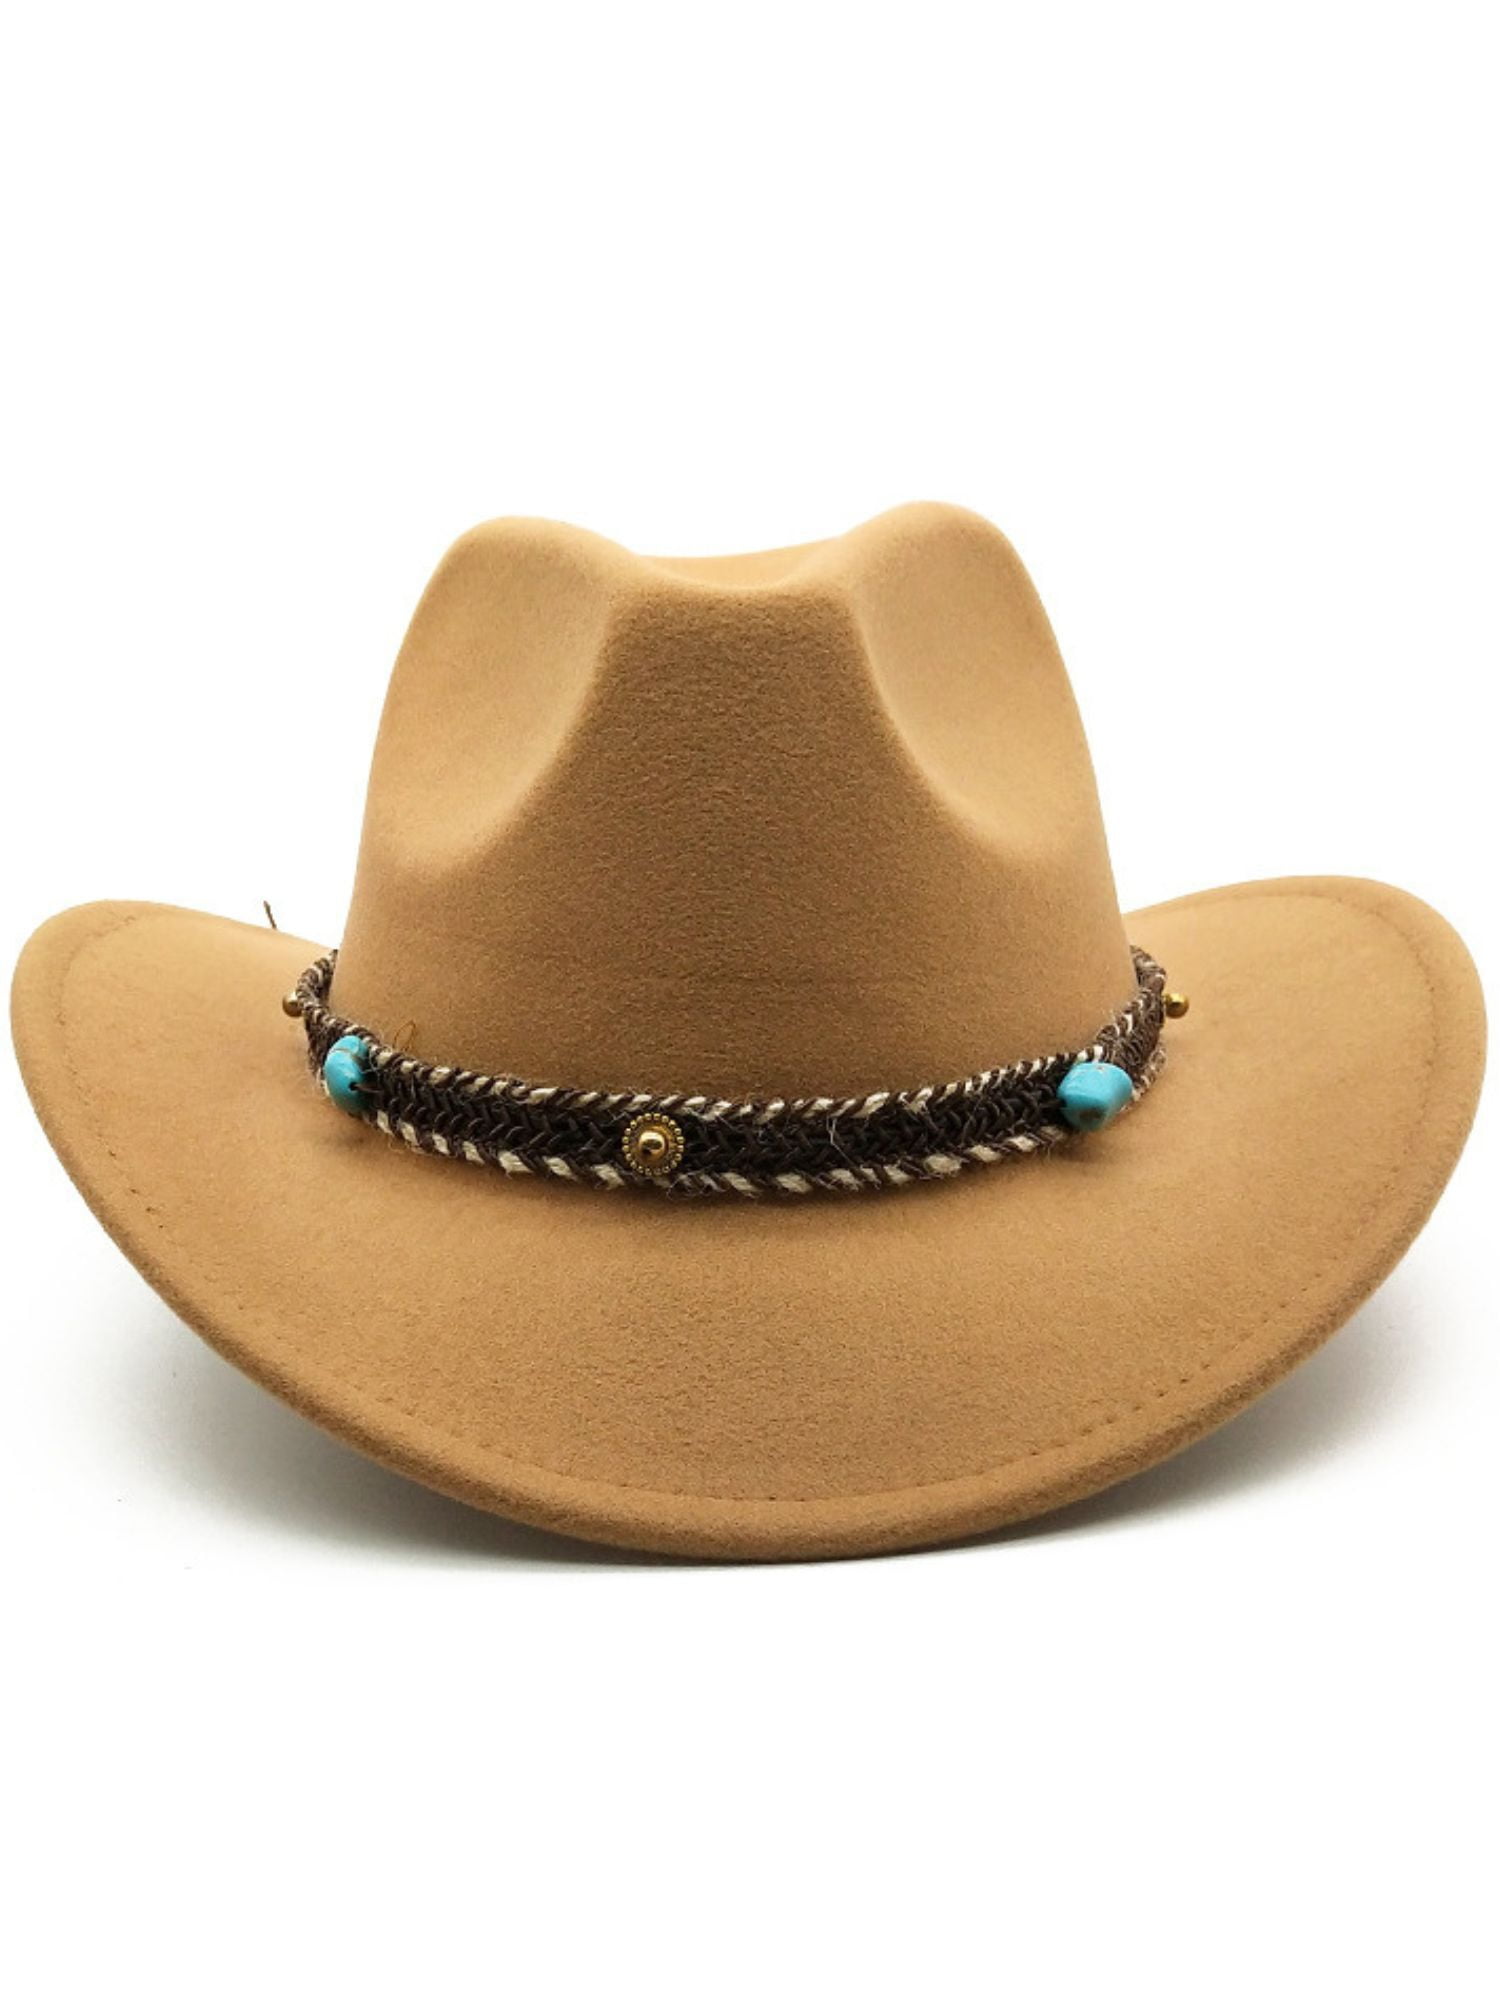 Ginsiom Western Cowboy Hat for Men Women Roll Up Felt Cowgirl Hat with ...